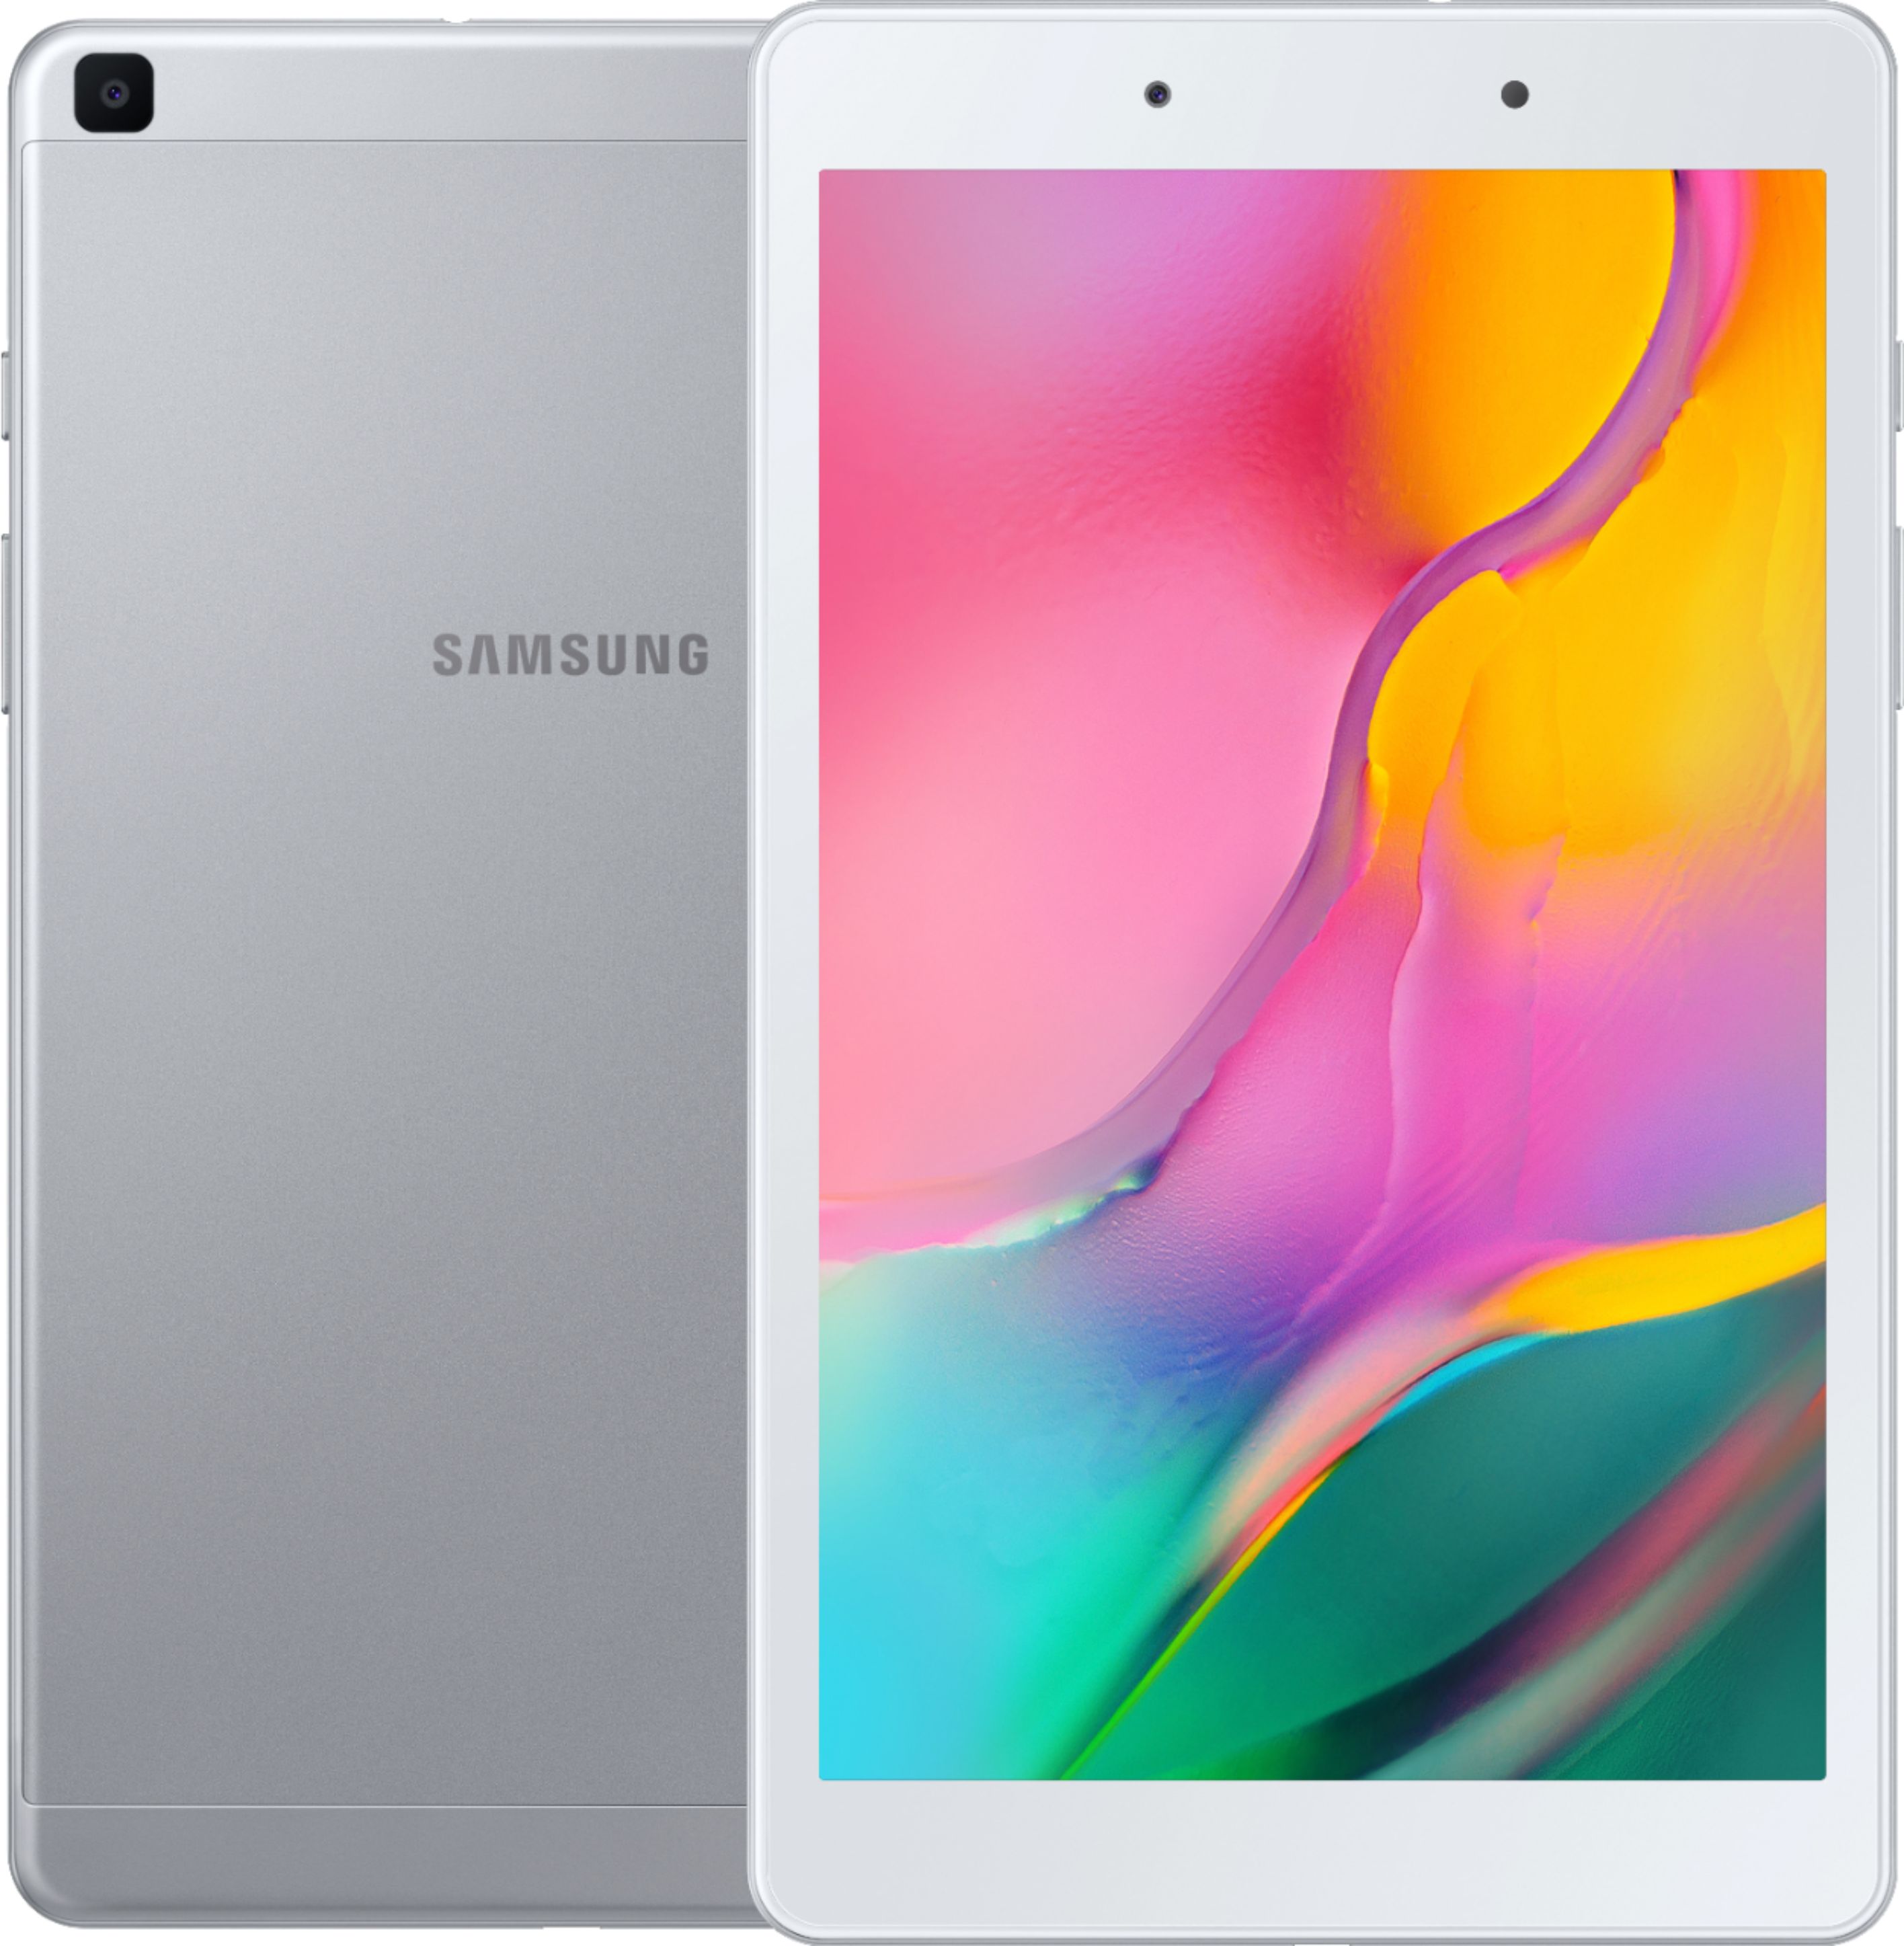 rouw Sluit een verzekering af Geloofsbelijdenis Samsung Galaxy Tab A (Latest Model) 8" 32GB Silver SM-T290NZSAXAR - Best Buy